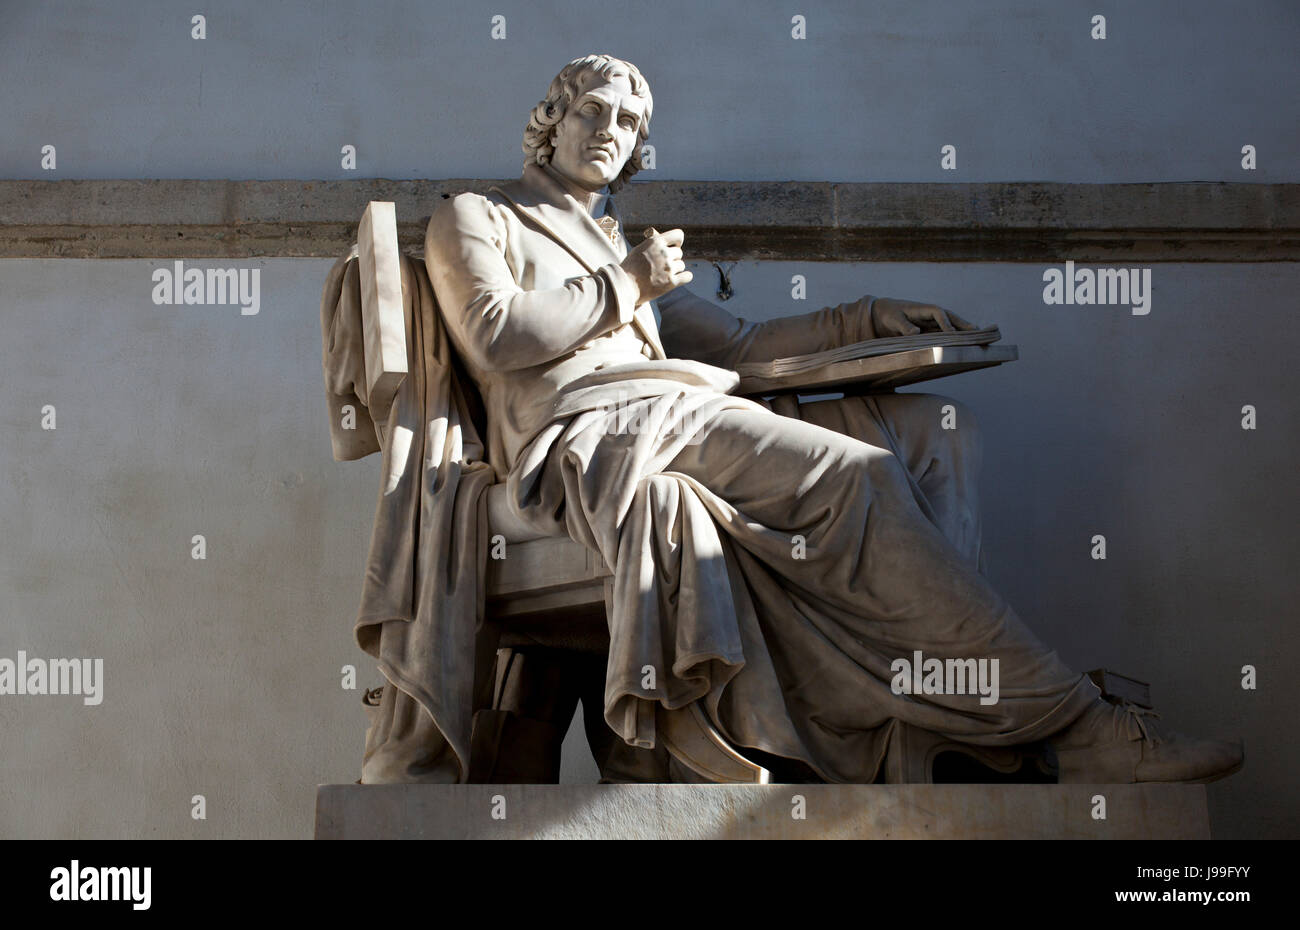 monument, statue, sculpture, milan, italy, historical, monument, memorial, art, Stock Photo